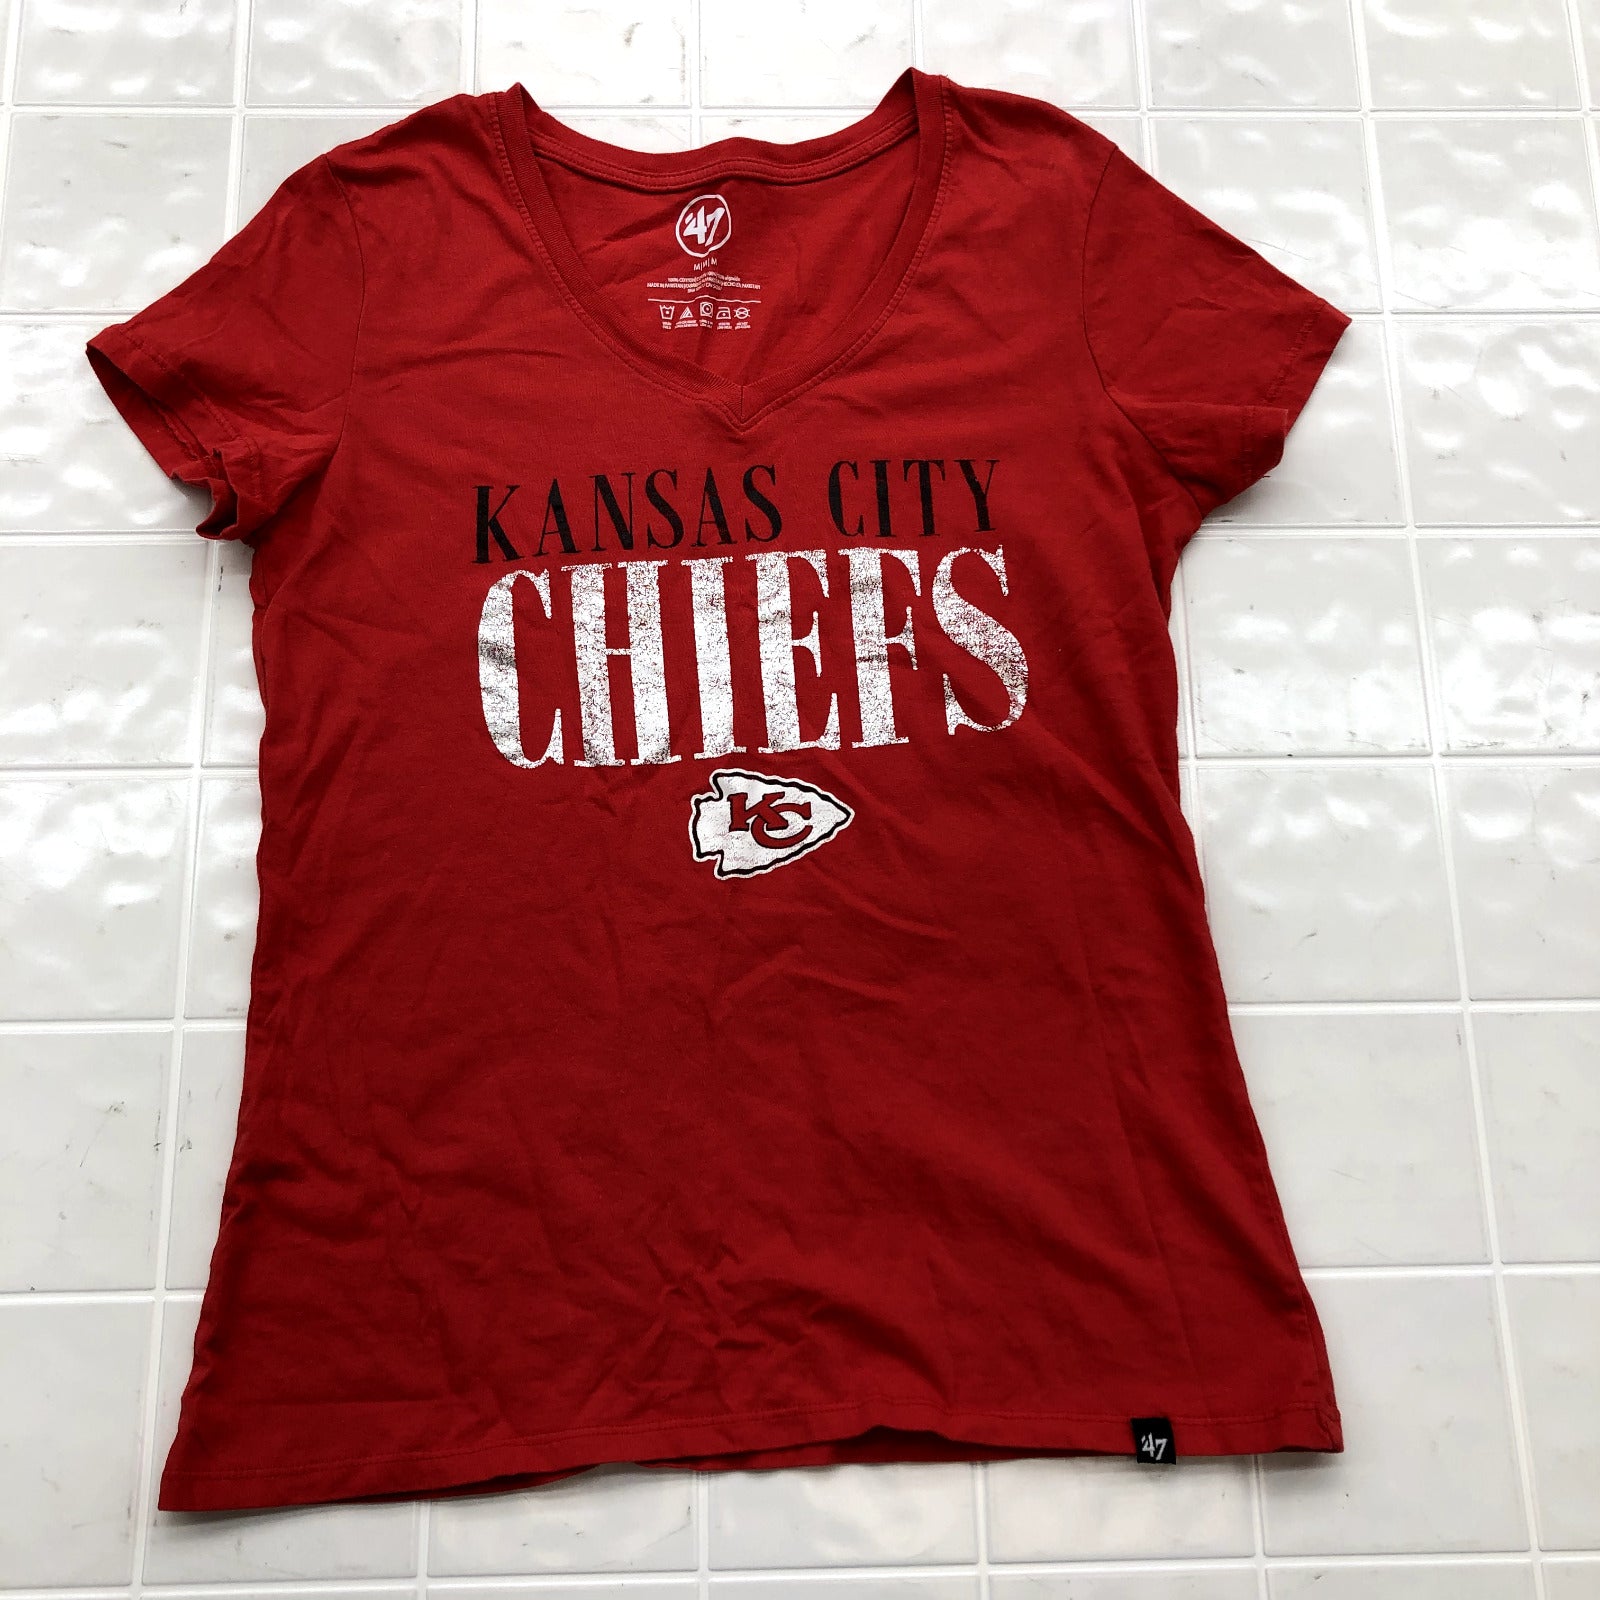 '47 Red Kansas City Chiefs V-neck Regular Fit Cotton T-shirt Women's Size M